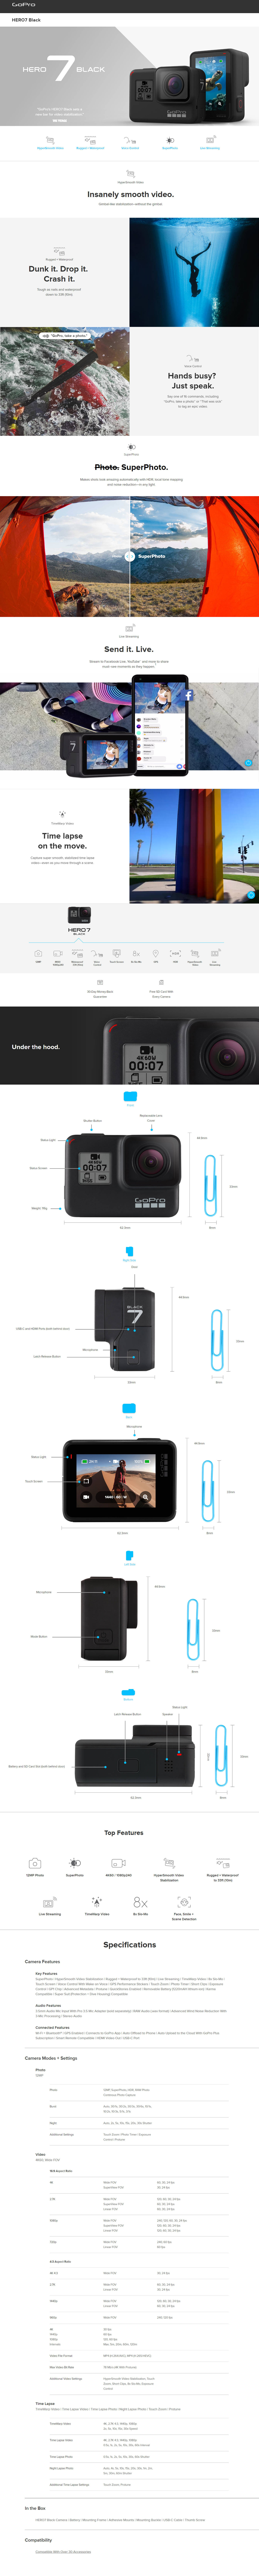 Buy Online GoPro HERO7 Black Waterproof Action Camera